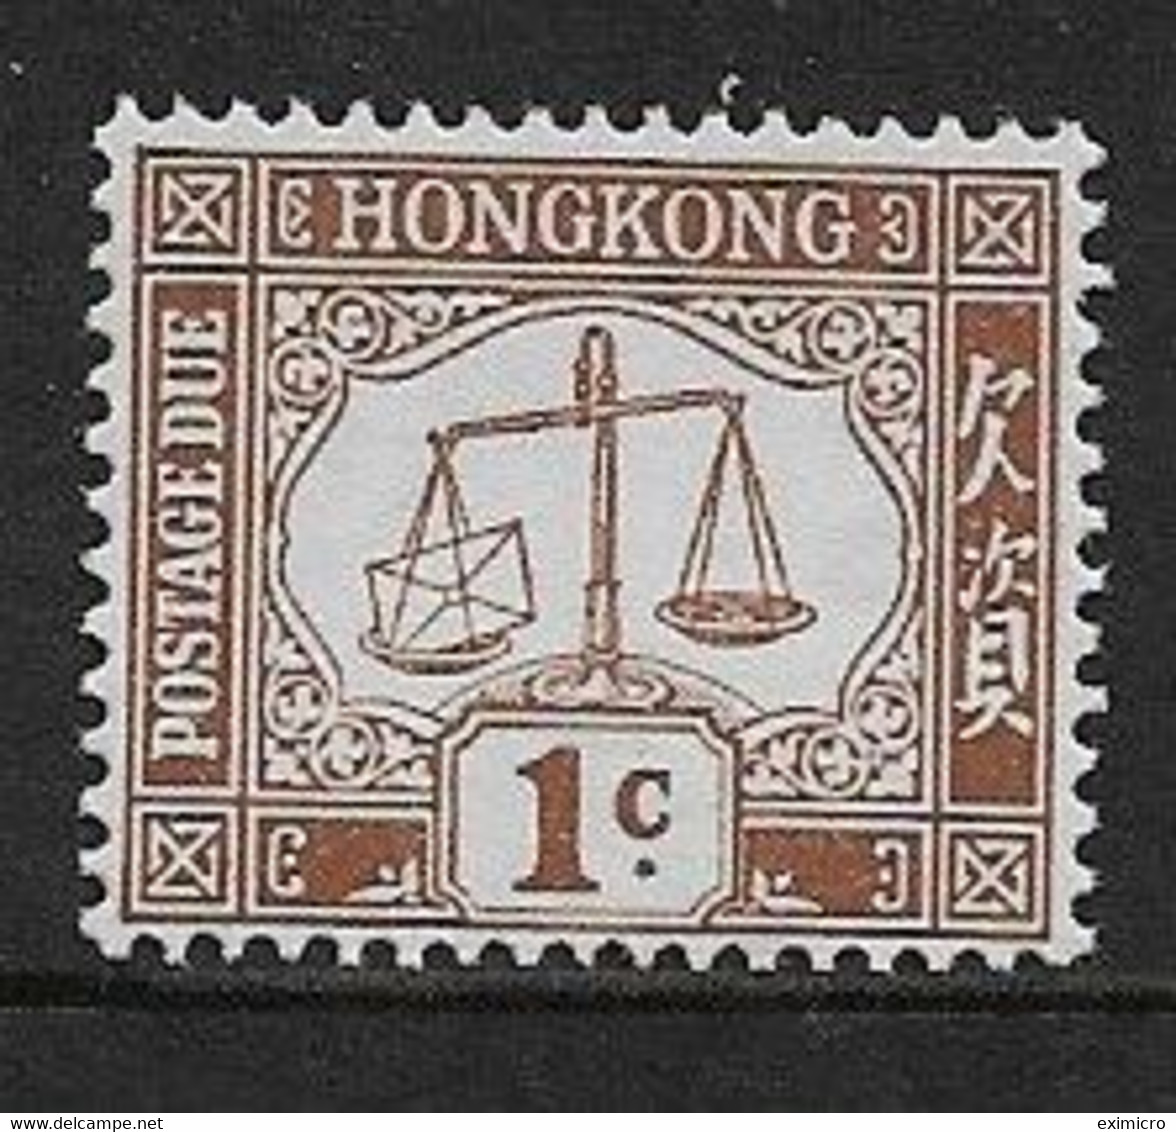 HONG KONG 1923 1c POSTAGE DUE SG D1a LIGHTLY MOUNTED MINT - Portomarken